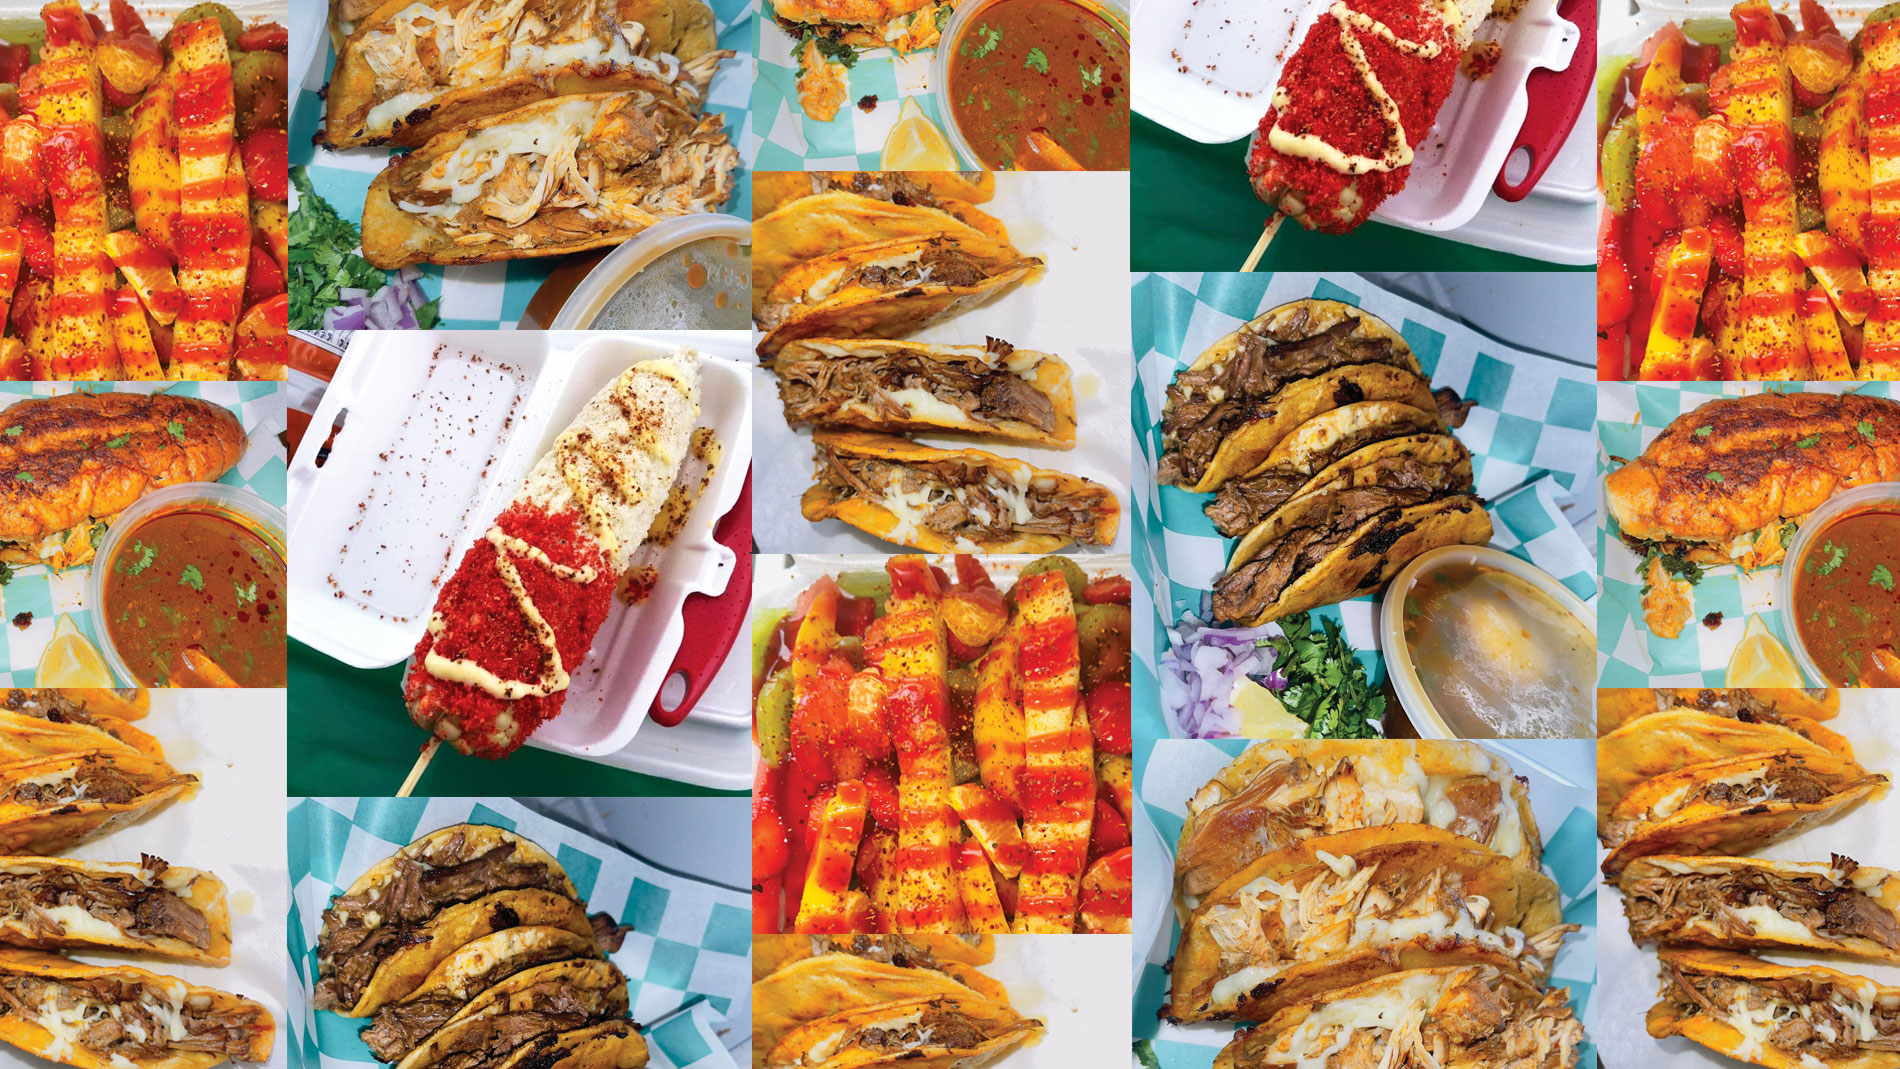 Loca:.Birria&Elotes brings classic Mexican street food to St. Louis